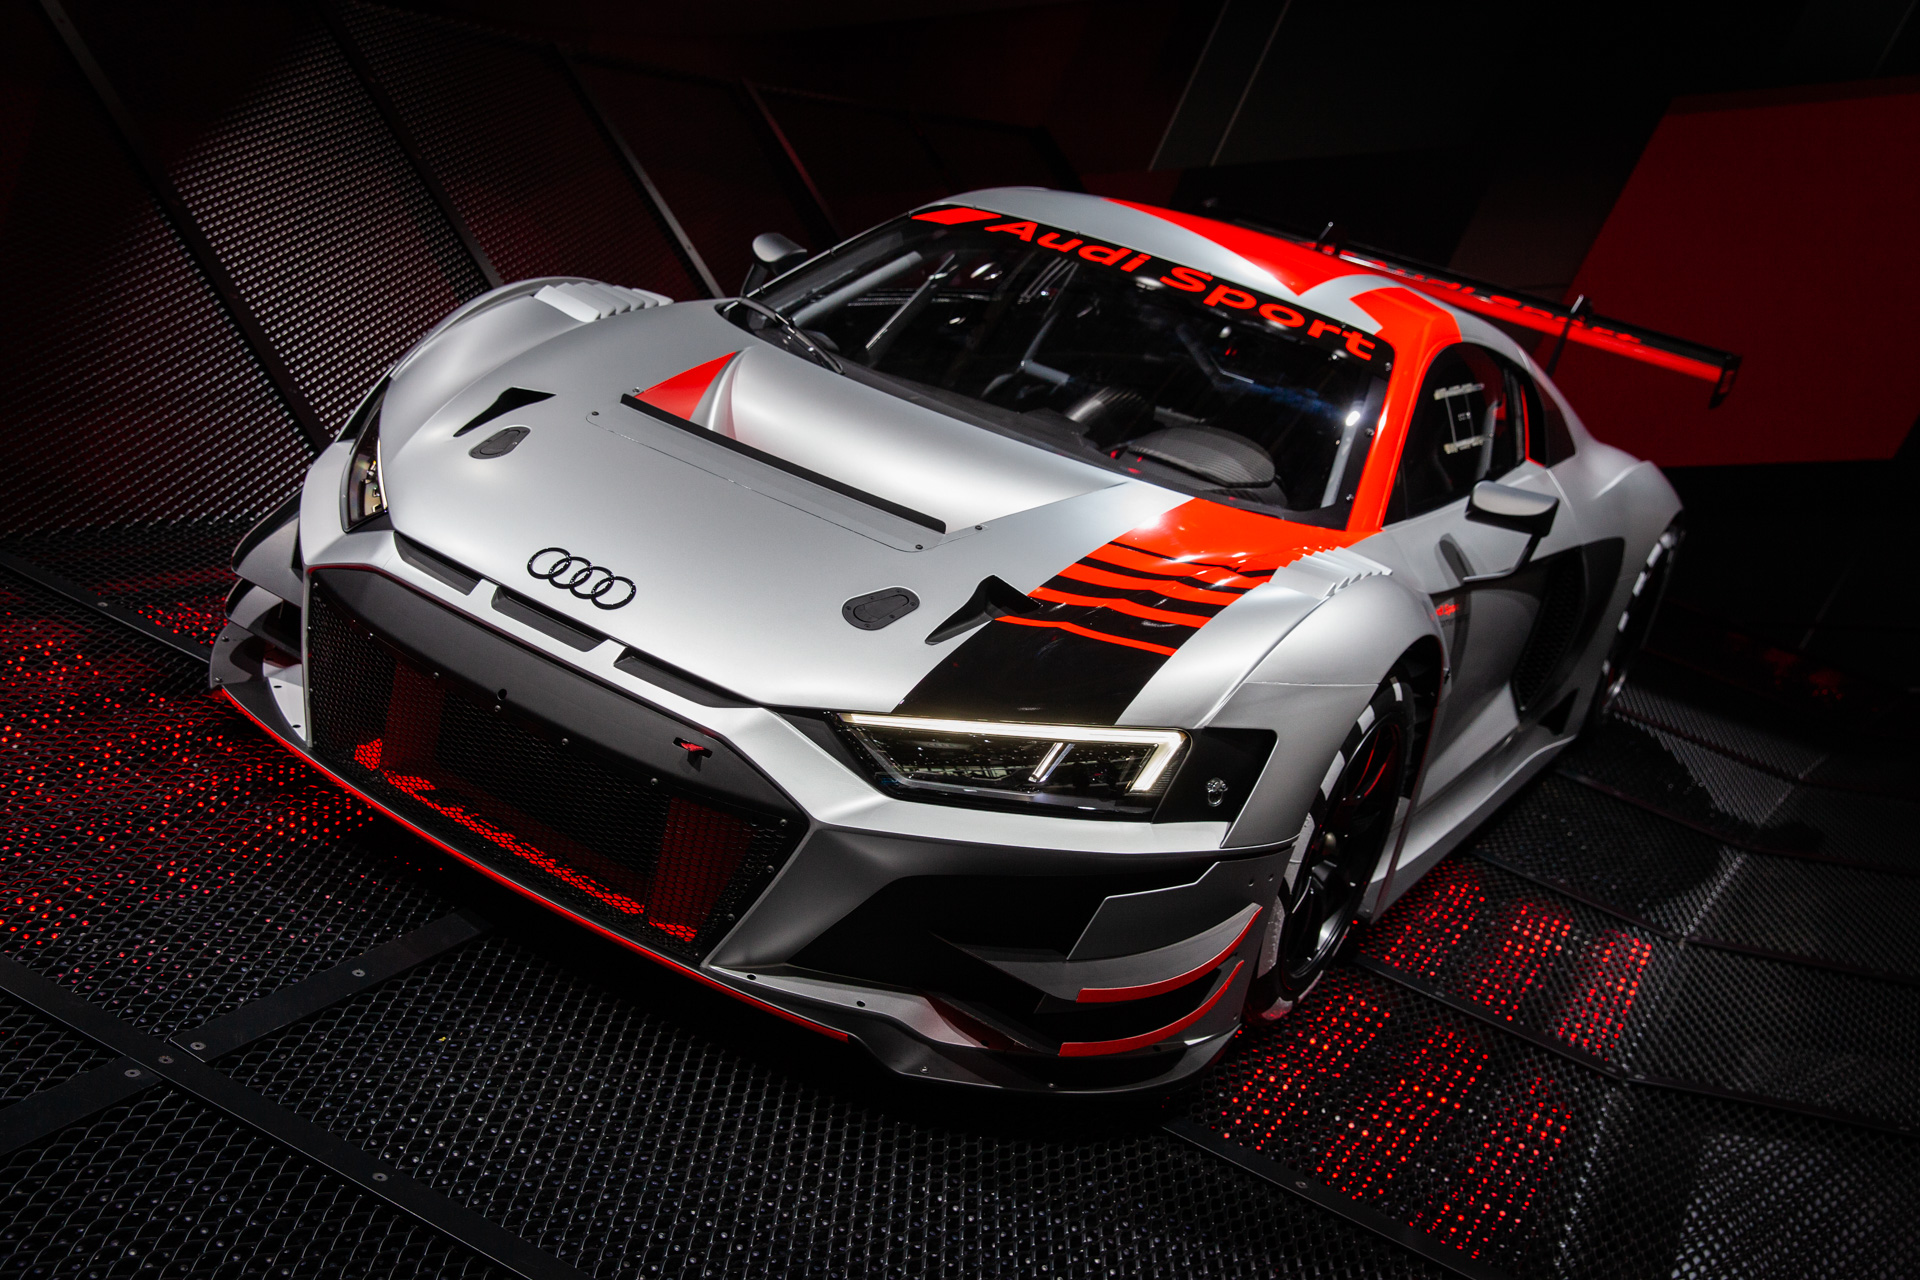 Ellendig aangenaam nauwelijks Updates to Audi R8 previewed by 2019 LMS race car